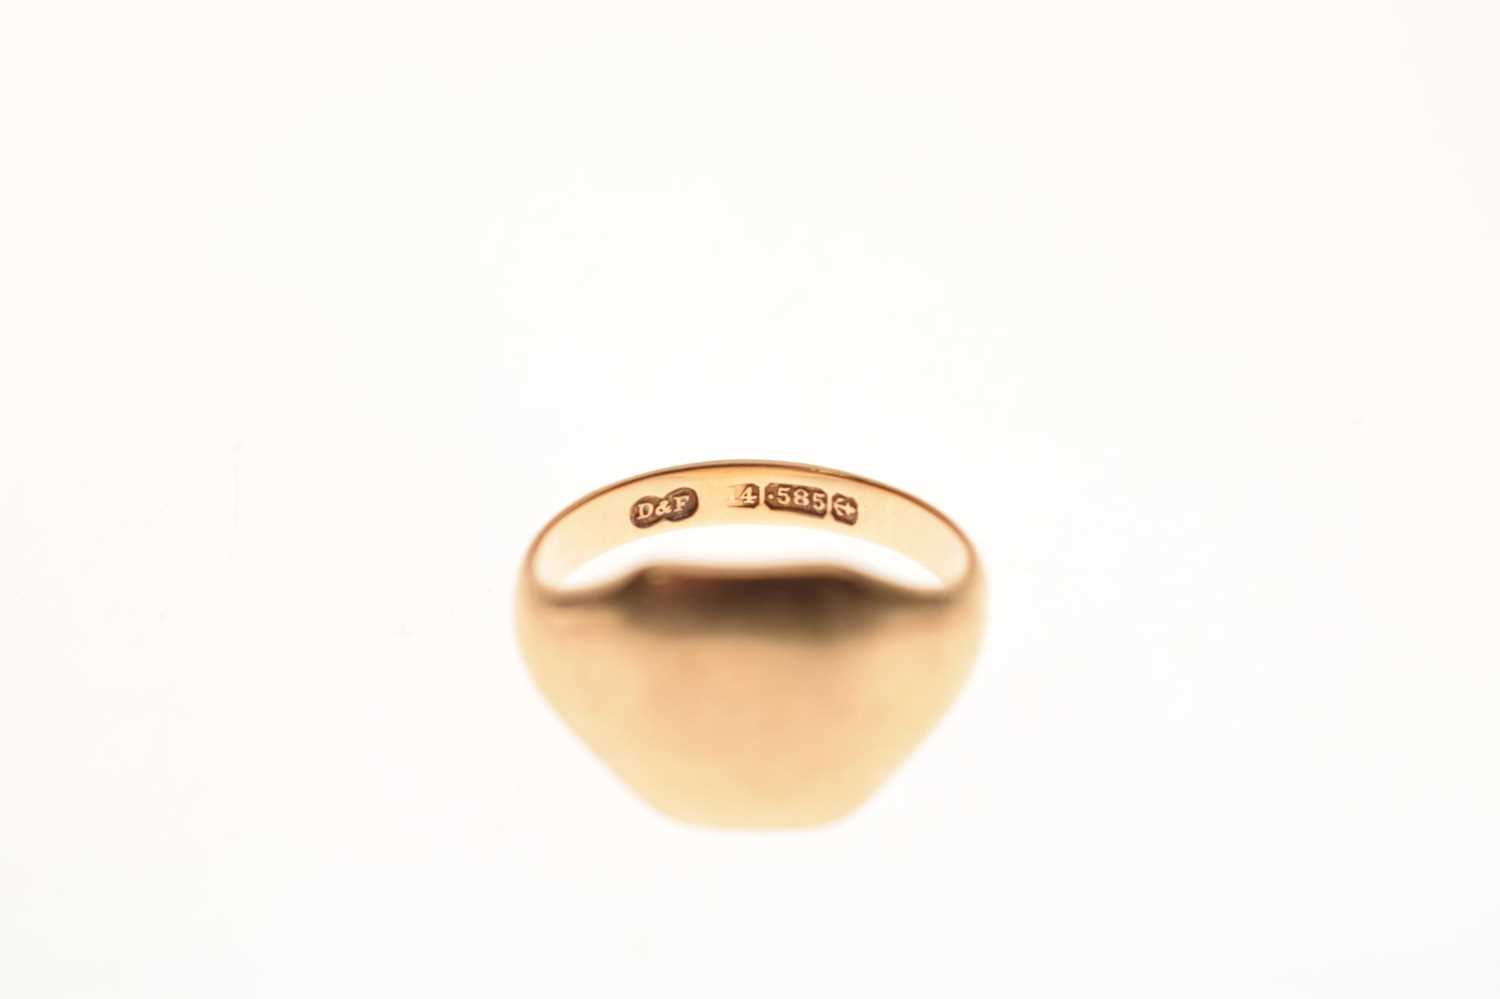 14ct gold signet ring - Image 5 of 6